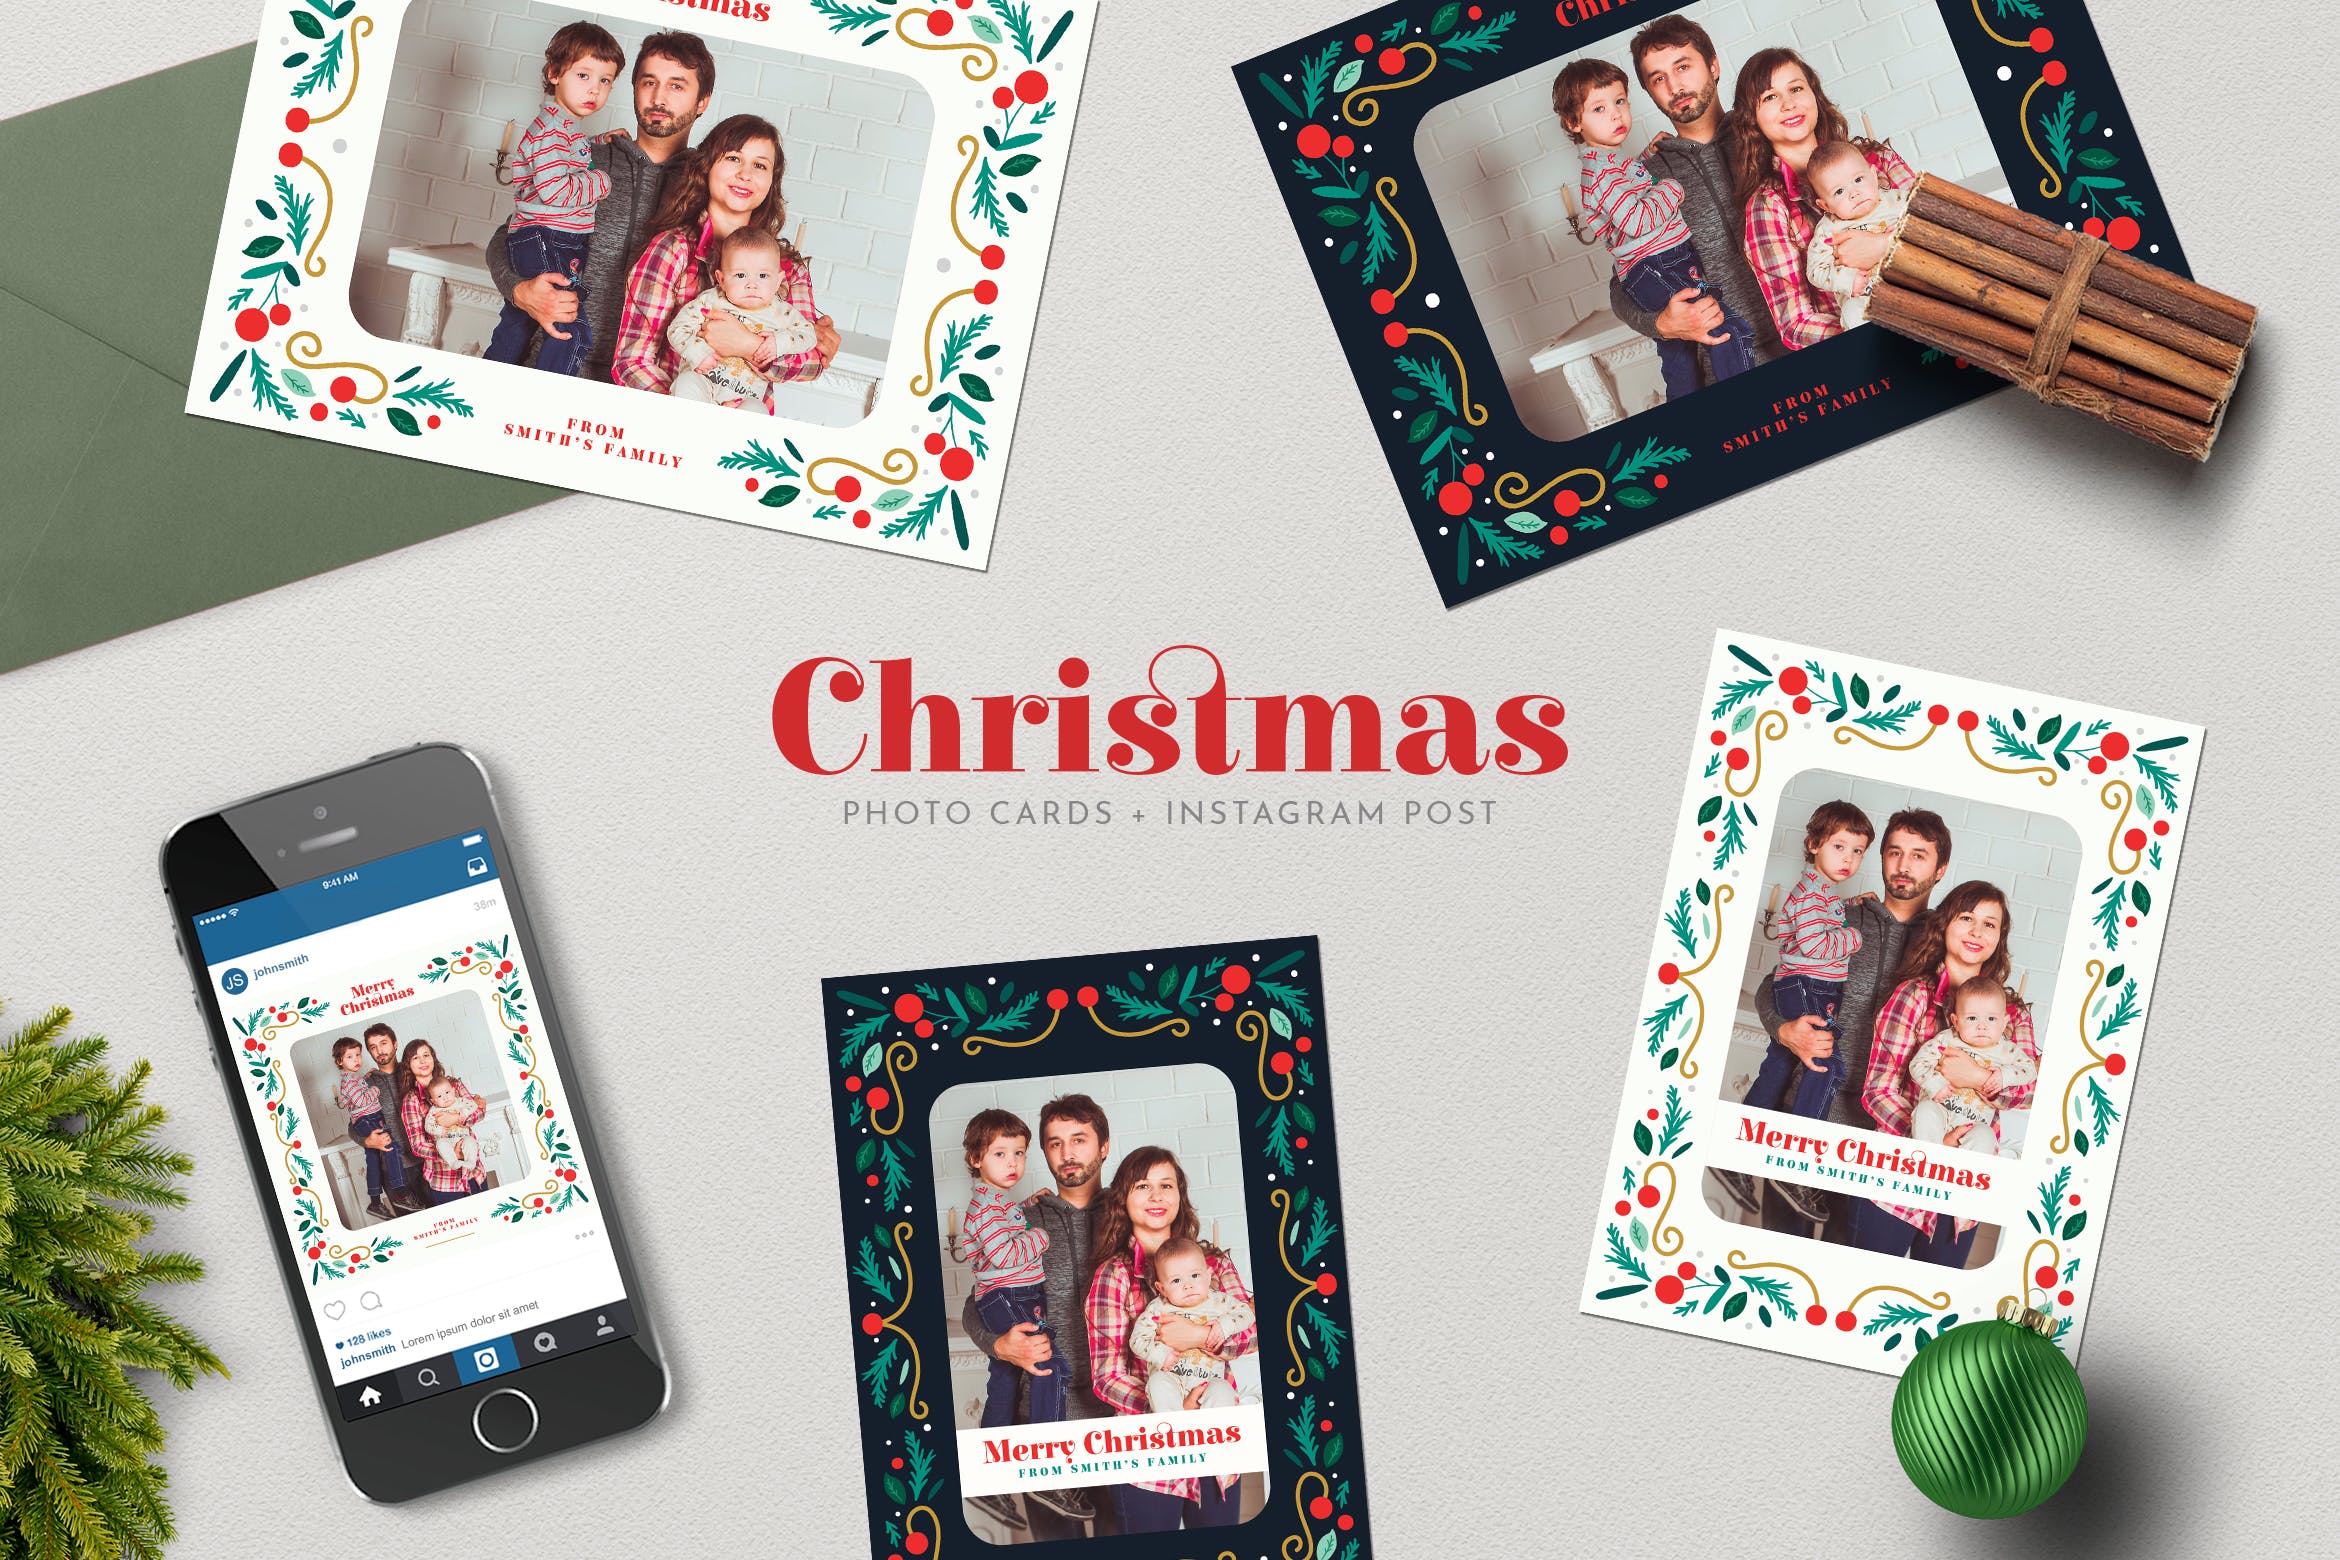 圣诞节照片明信片&Instagram贴图设计模板 Christmas PhotoCards +Instagram Post插图